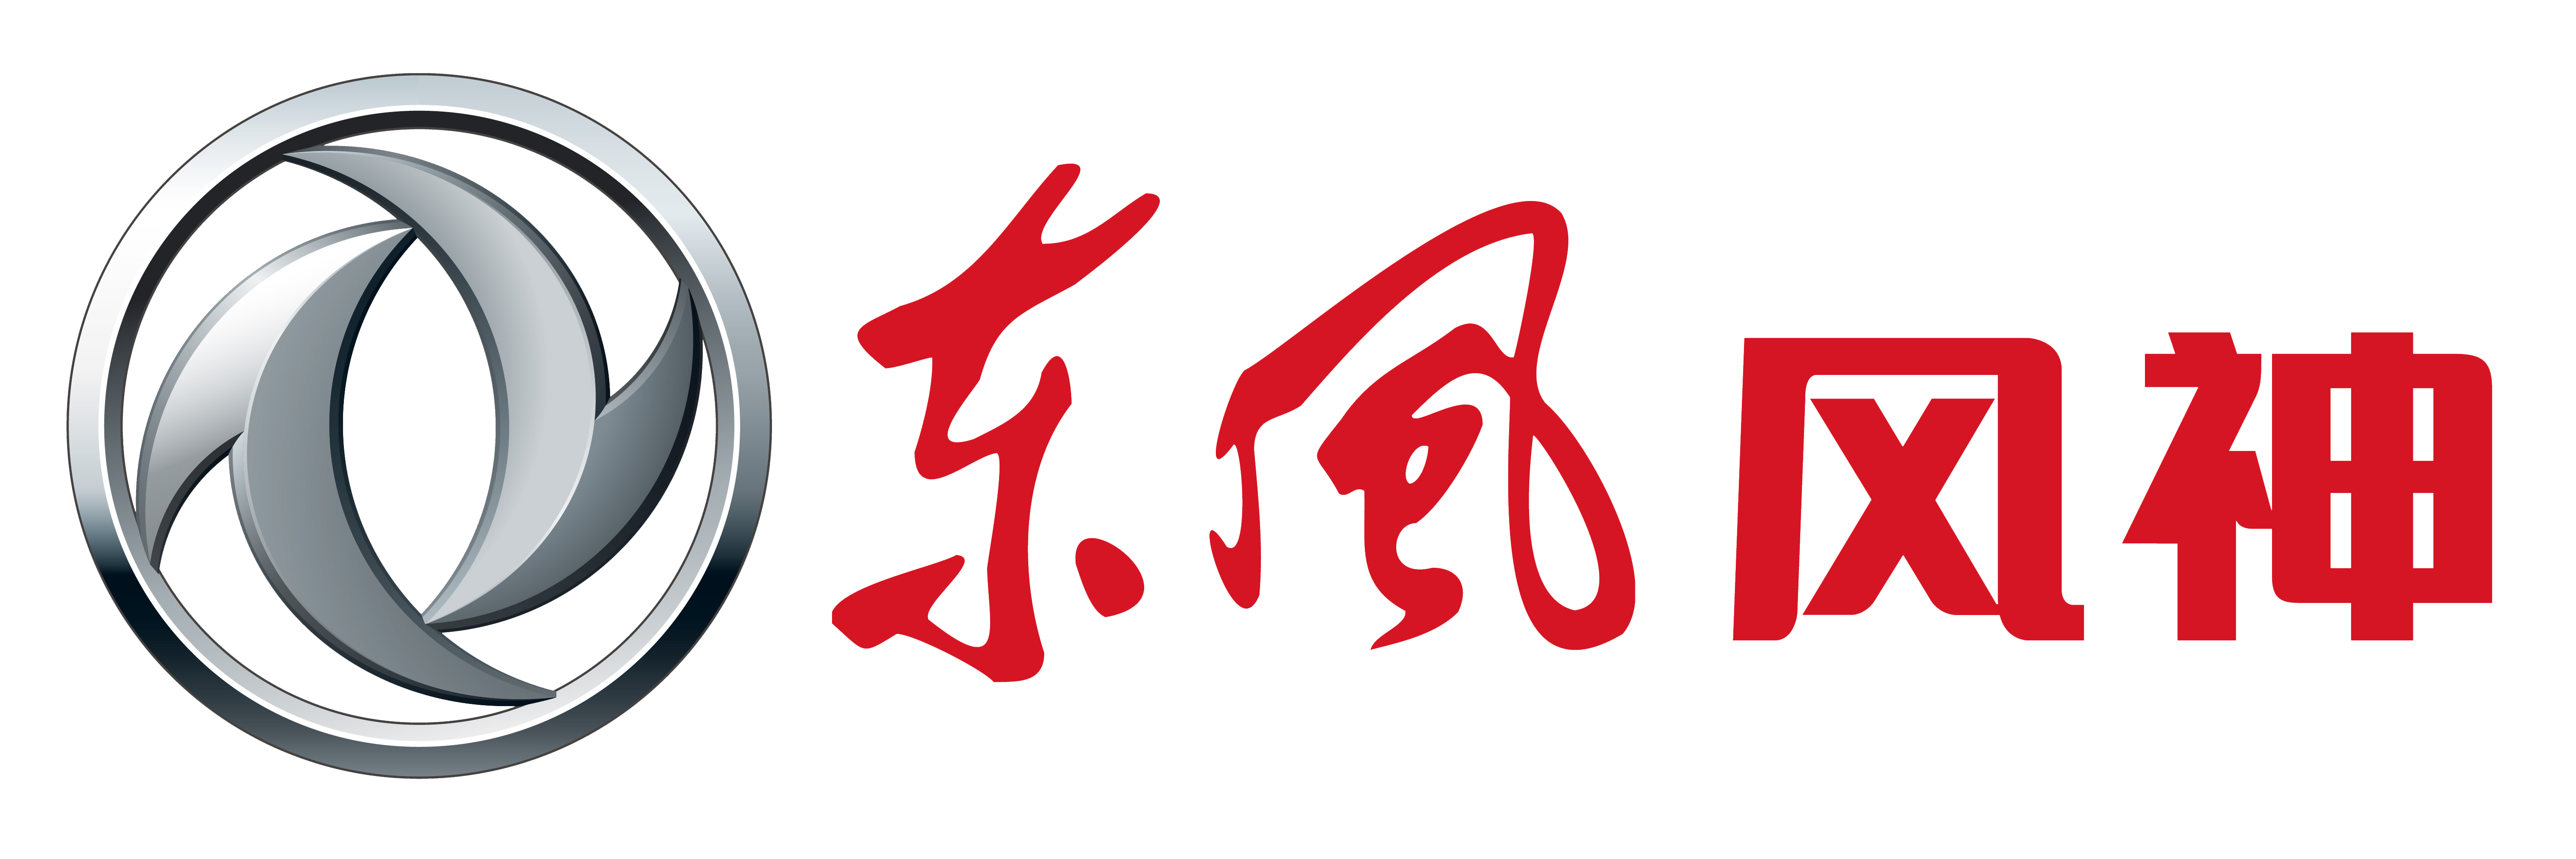 Dongfeng (DFM) Logo 1920x1200